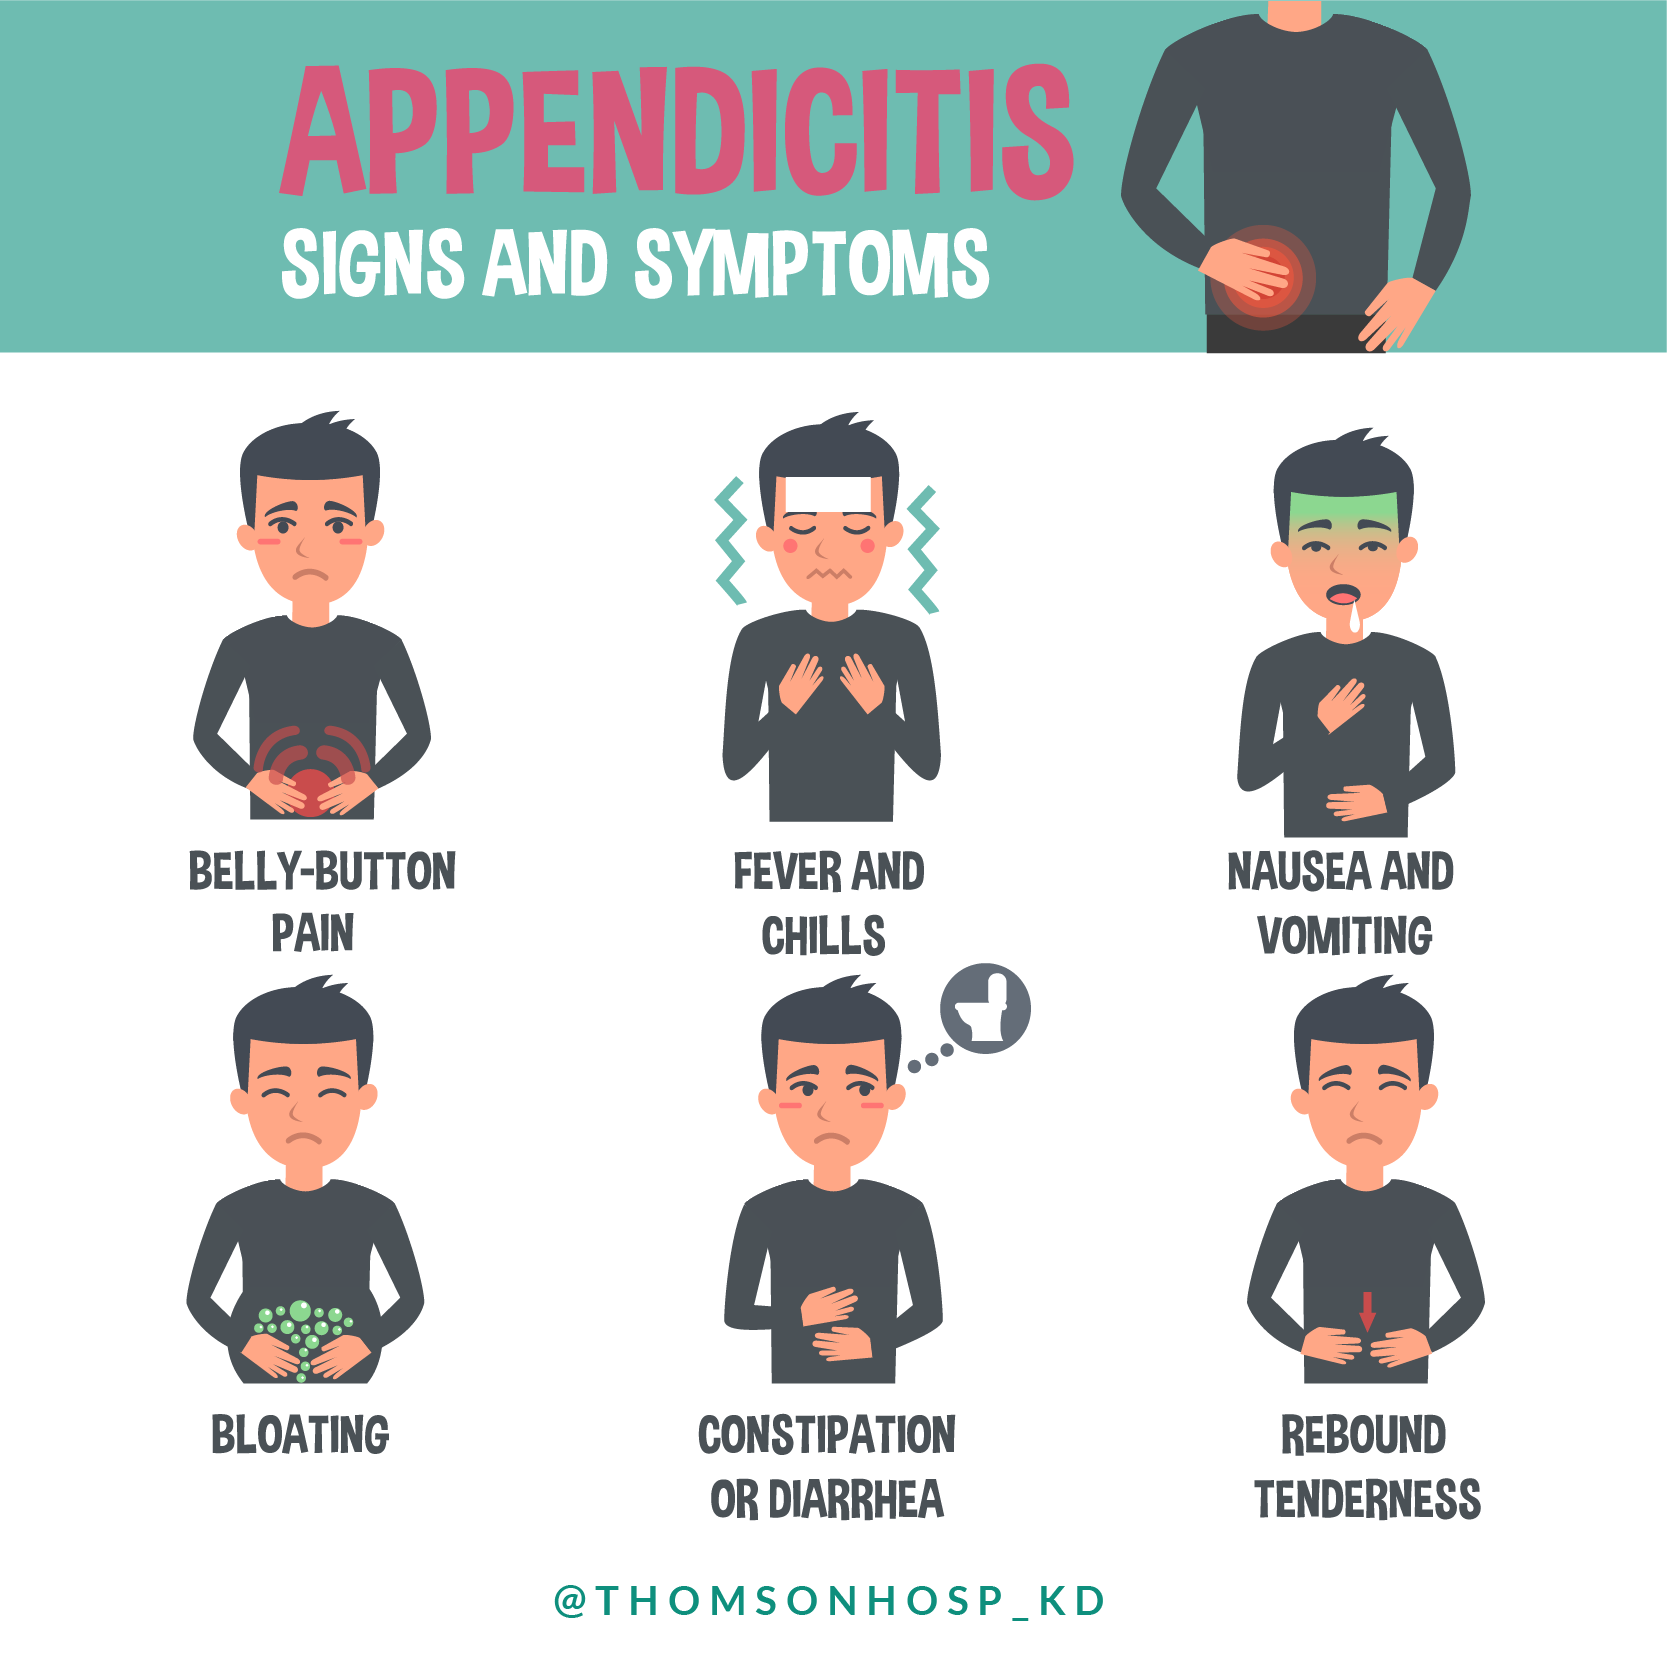 Appendicitis symptoms